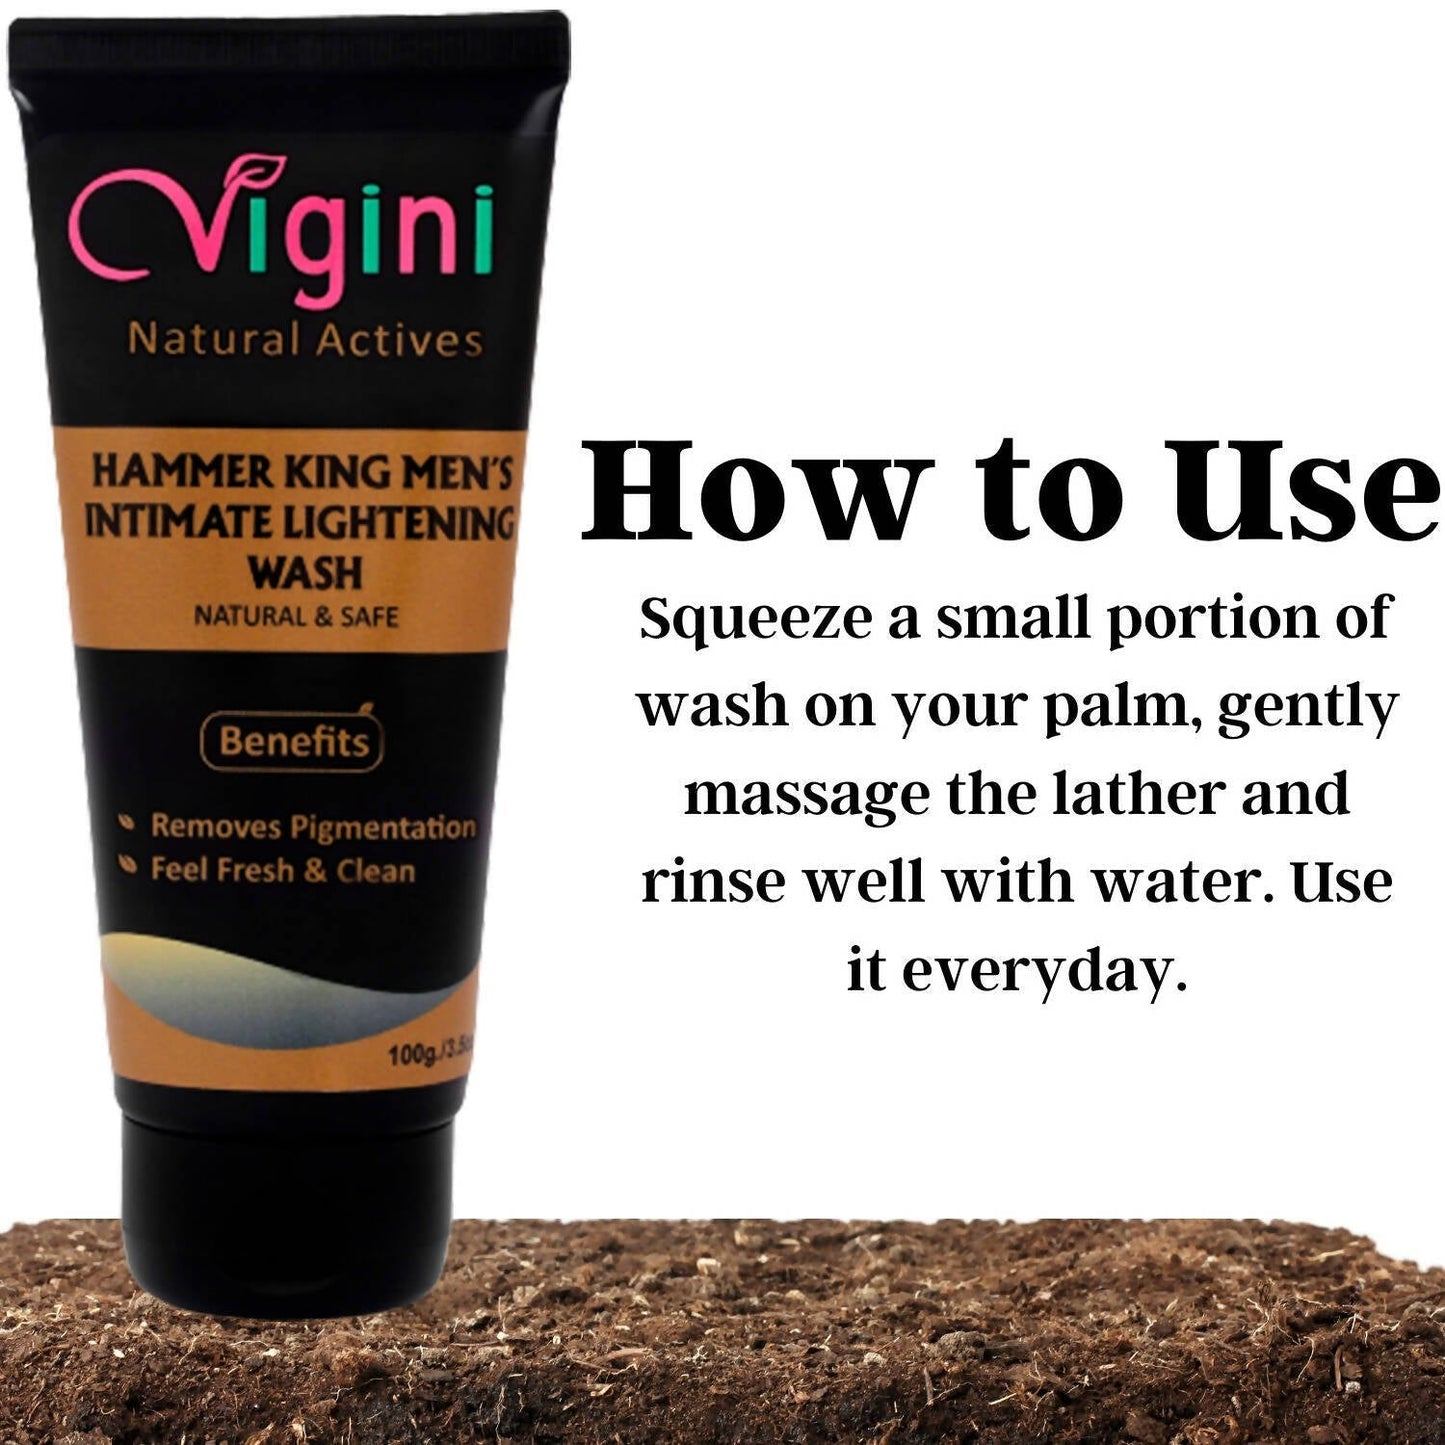 Vigini Natural Hammer King Men's Intimate Lightening Wash for Men